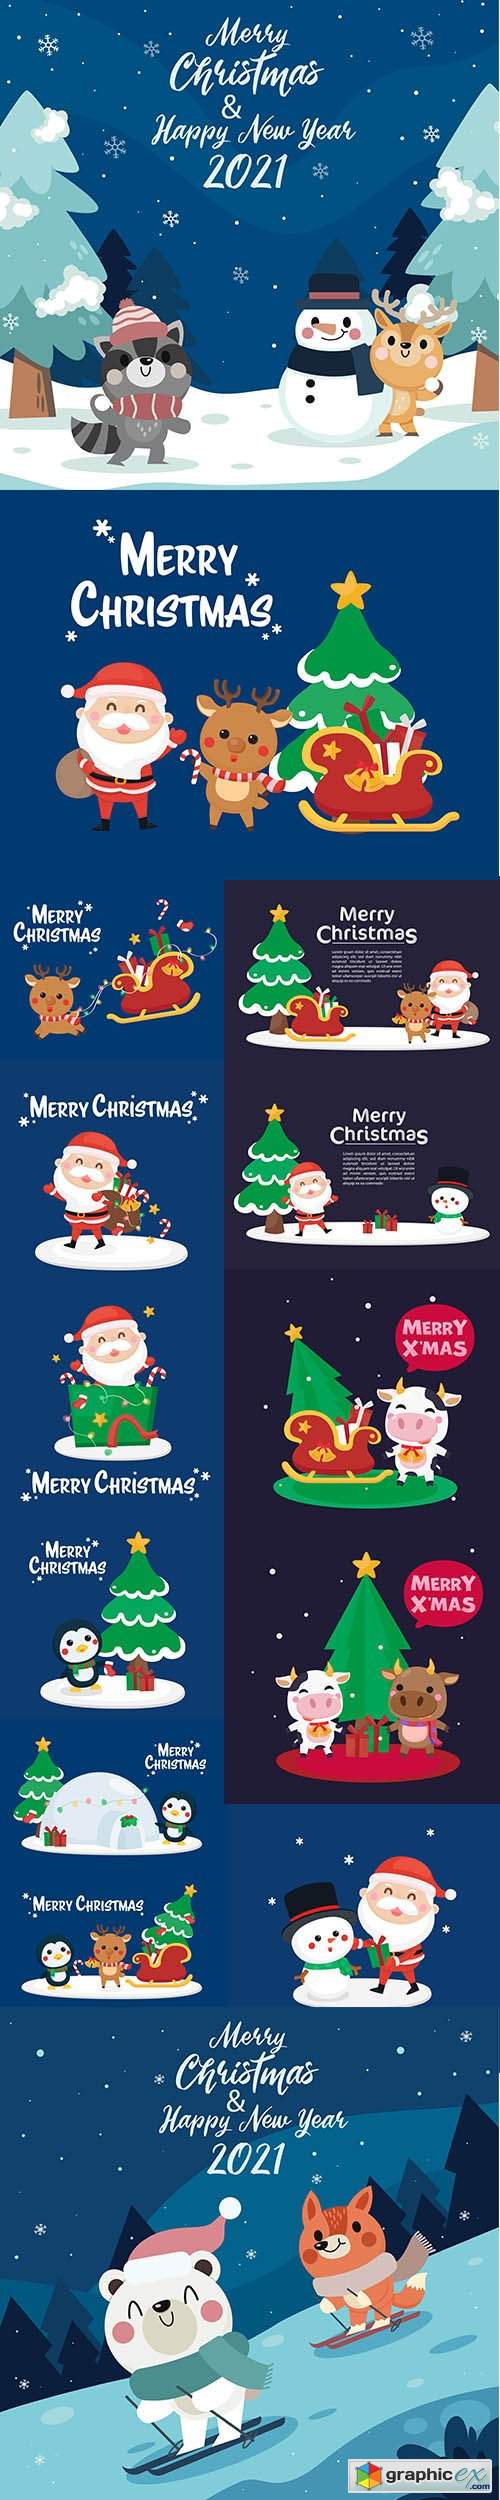  Christmas festive template greeting card 